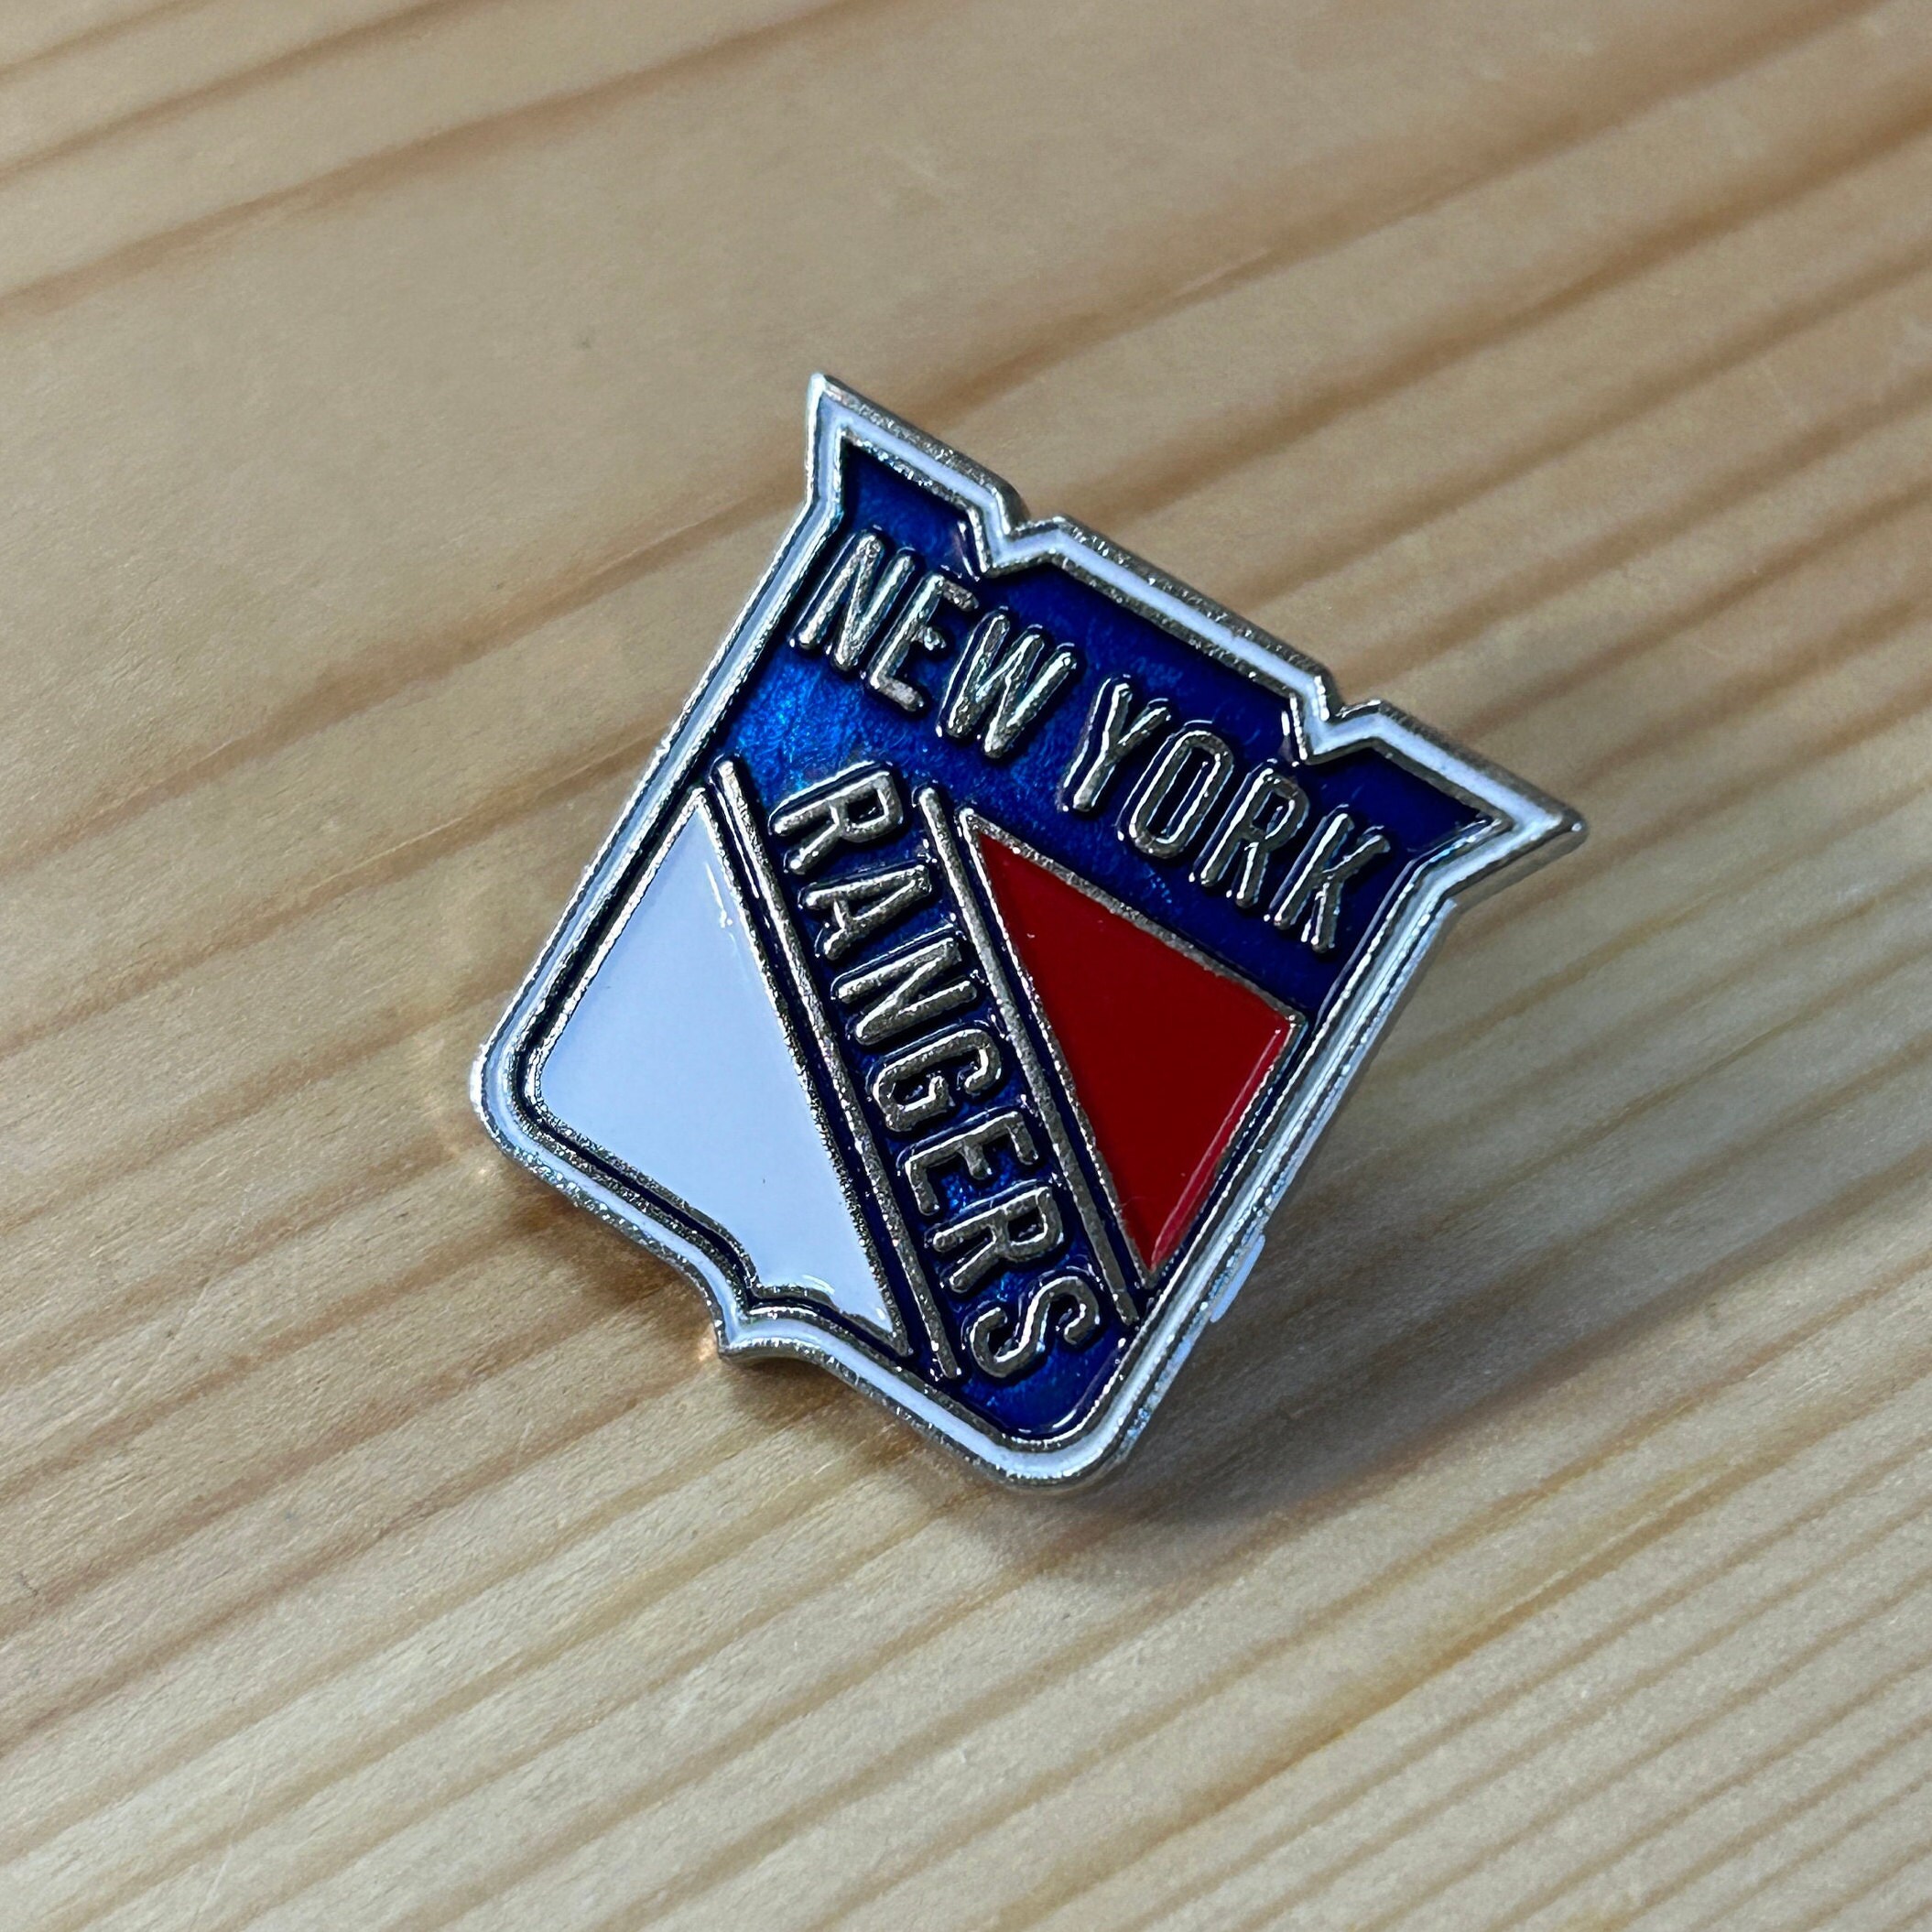 Pin on new york rangers